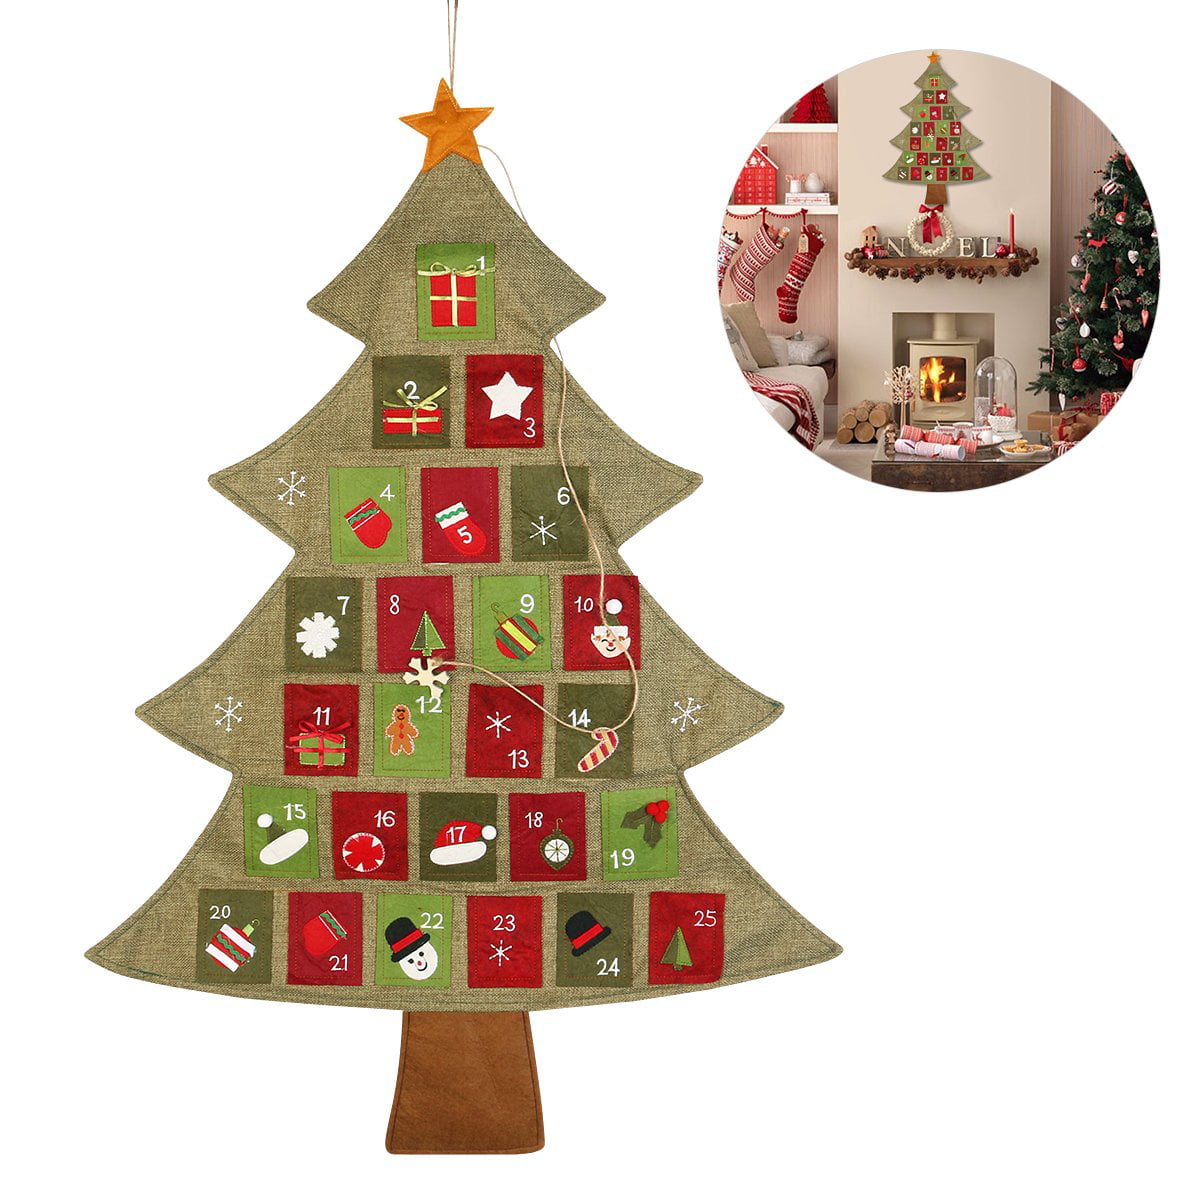 reactionnx-felt-christmas-advent-calendar-countdown-to-xmas-tree-advent-calendars-for-kids